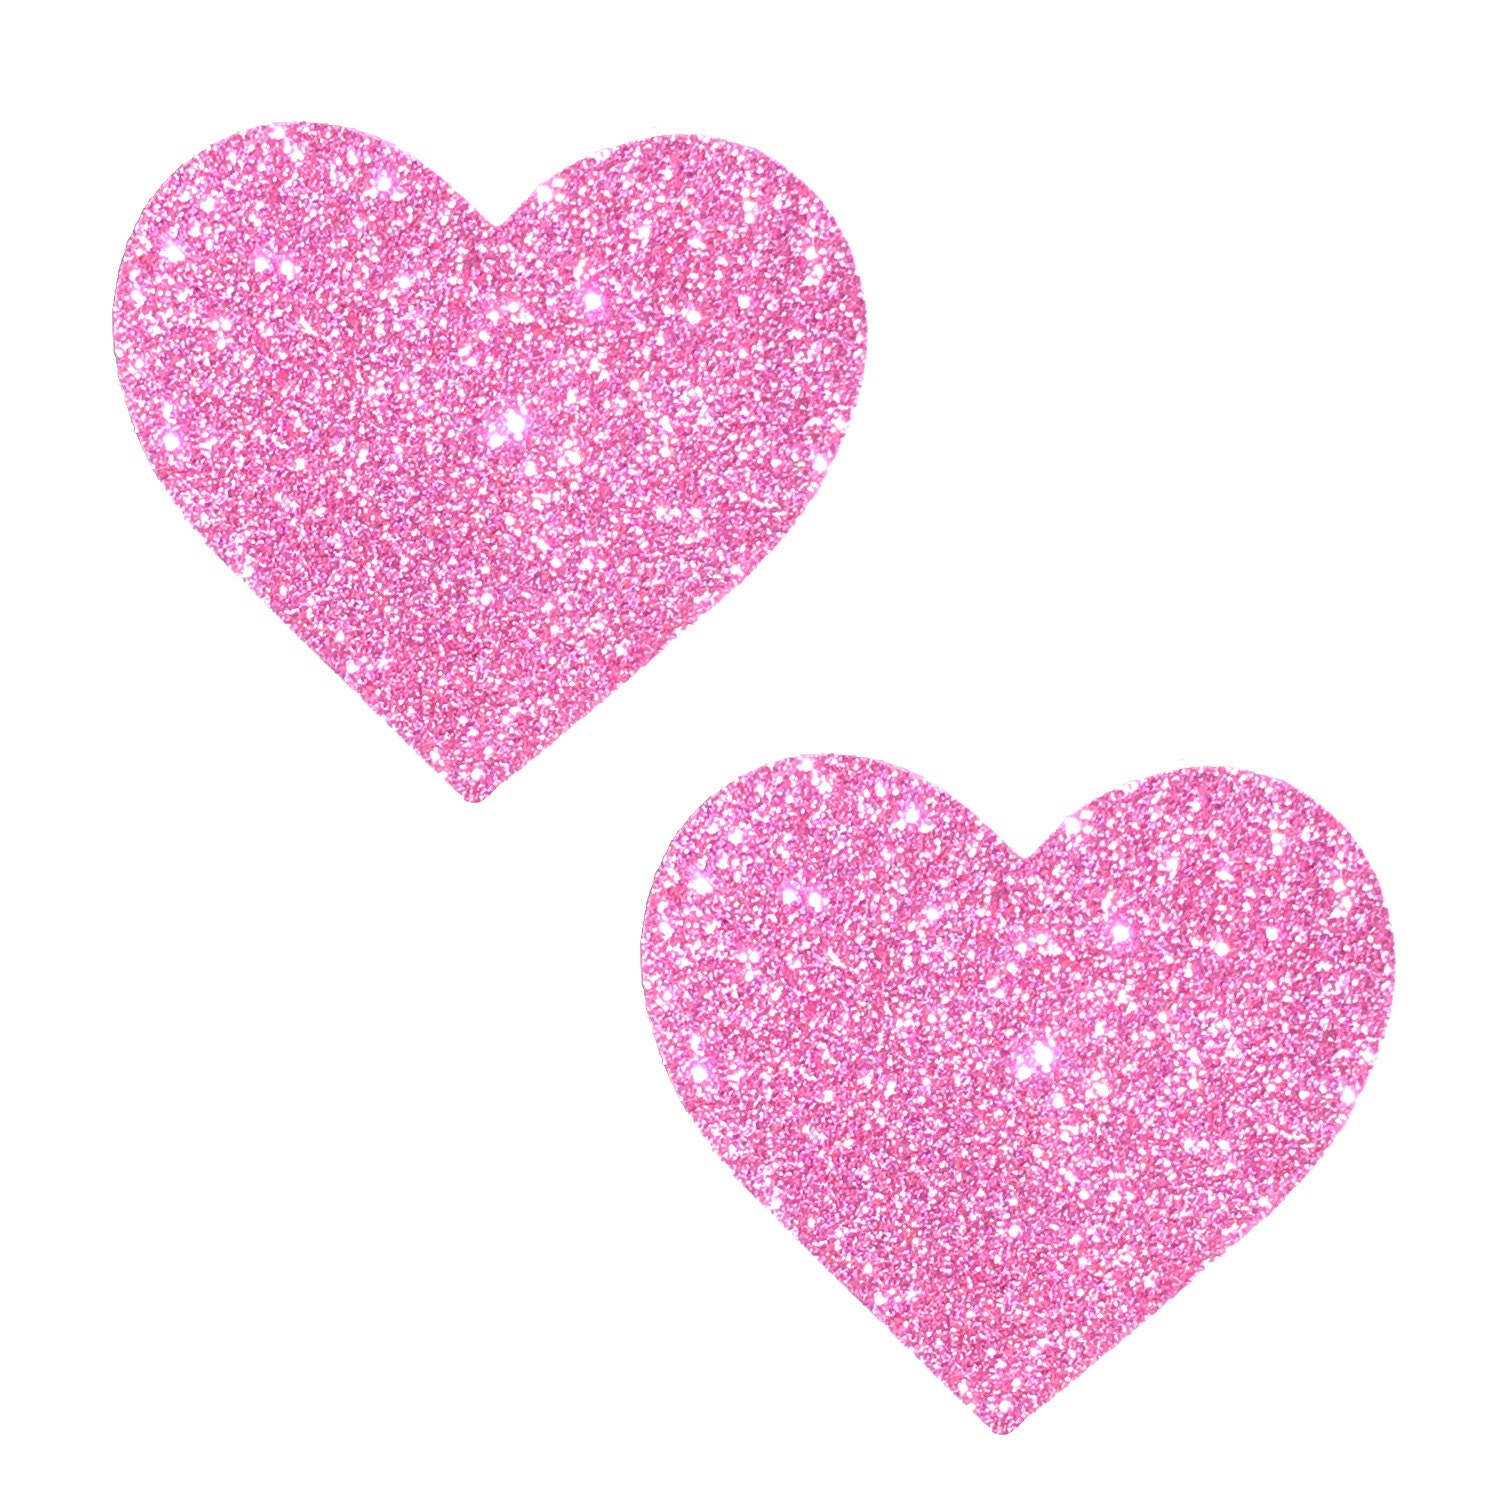 Sheer Mesh Bralette Pink Heart Sequin Pasties Black Sheer Bralette Applique  Bra W Adjustable Straps Fashion Mesh Bralette for Women Teens 